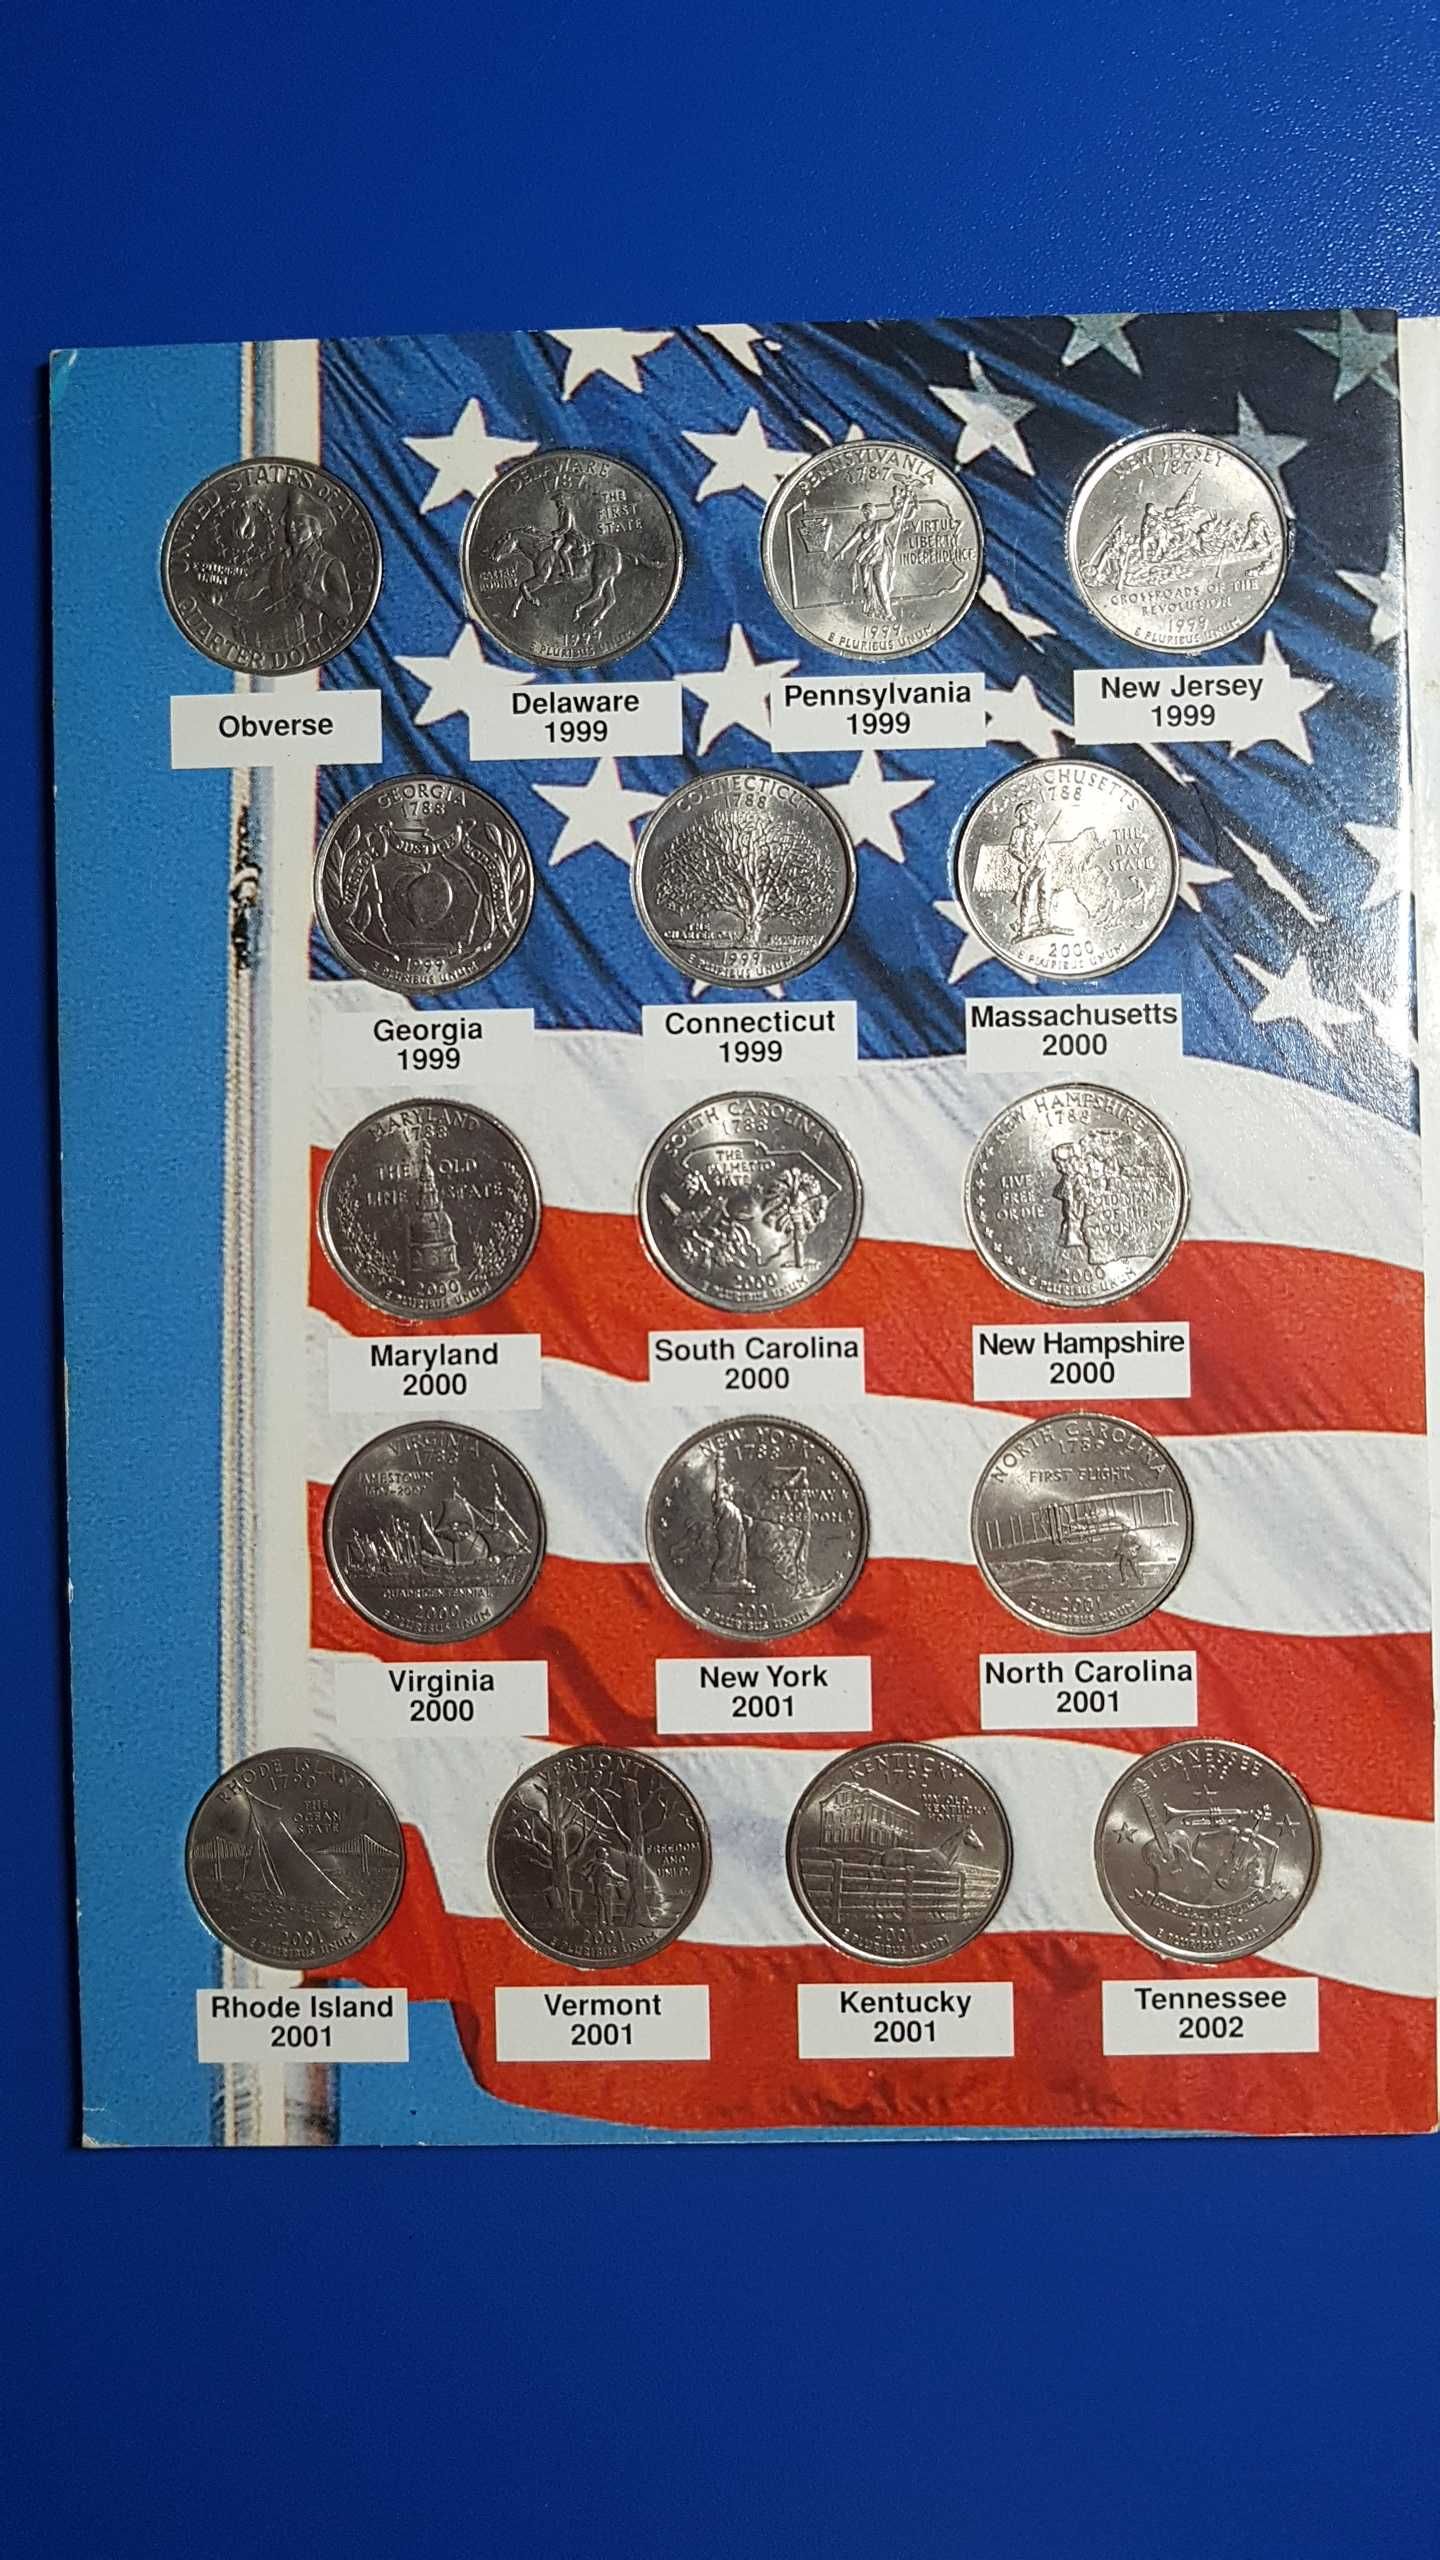 Colectie completa de monede "Commemorative Quarters USA 99-08"